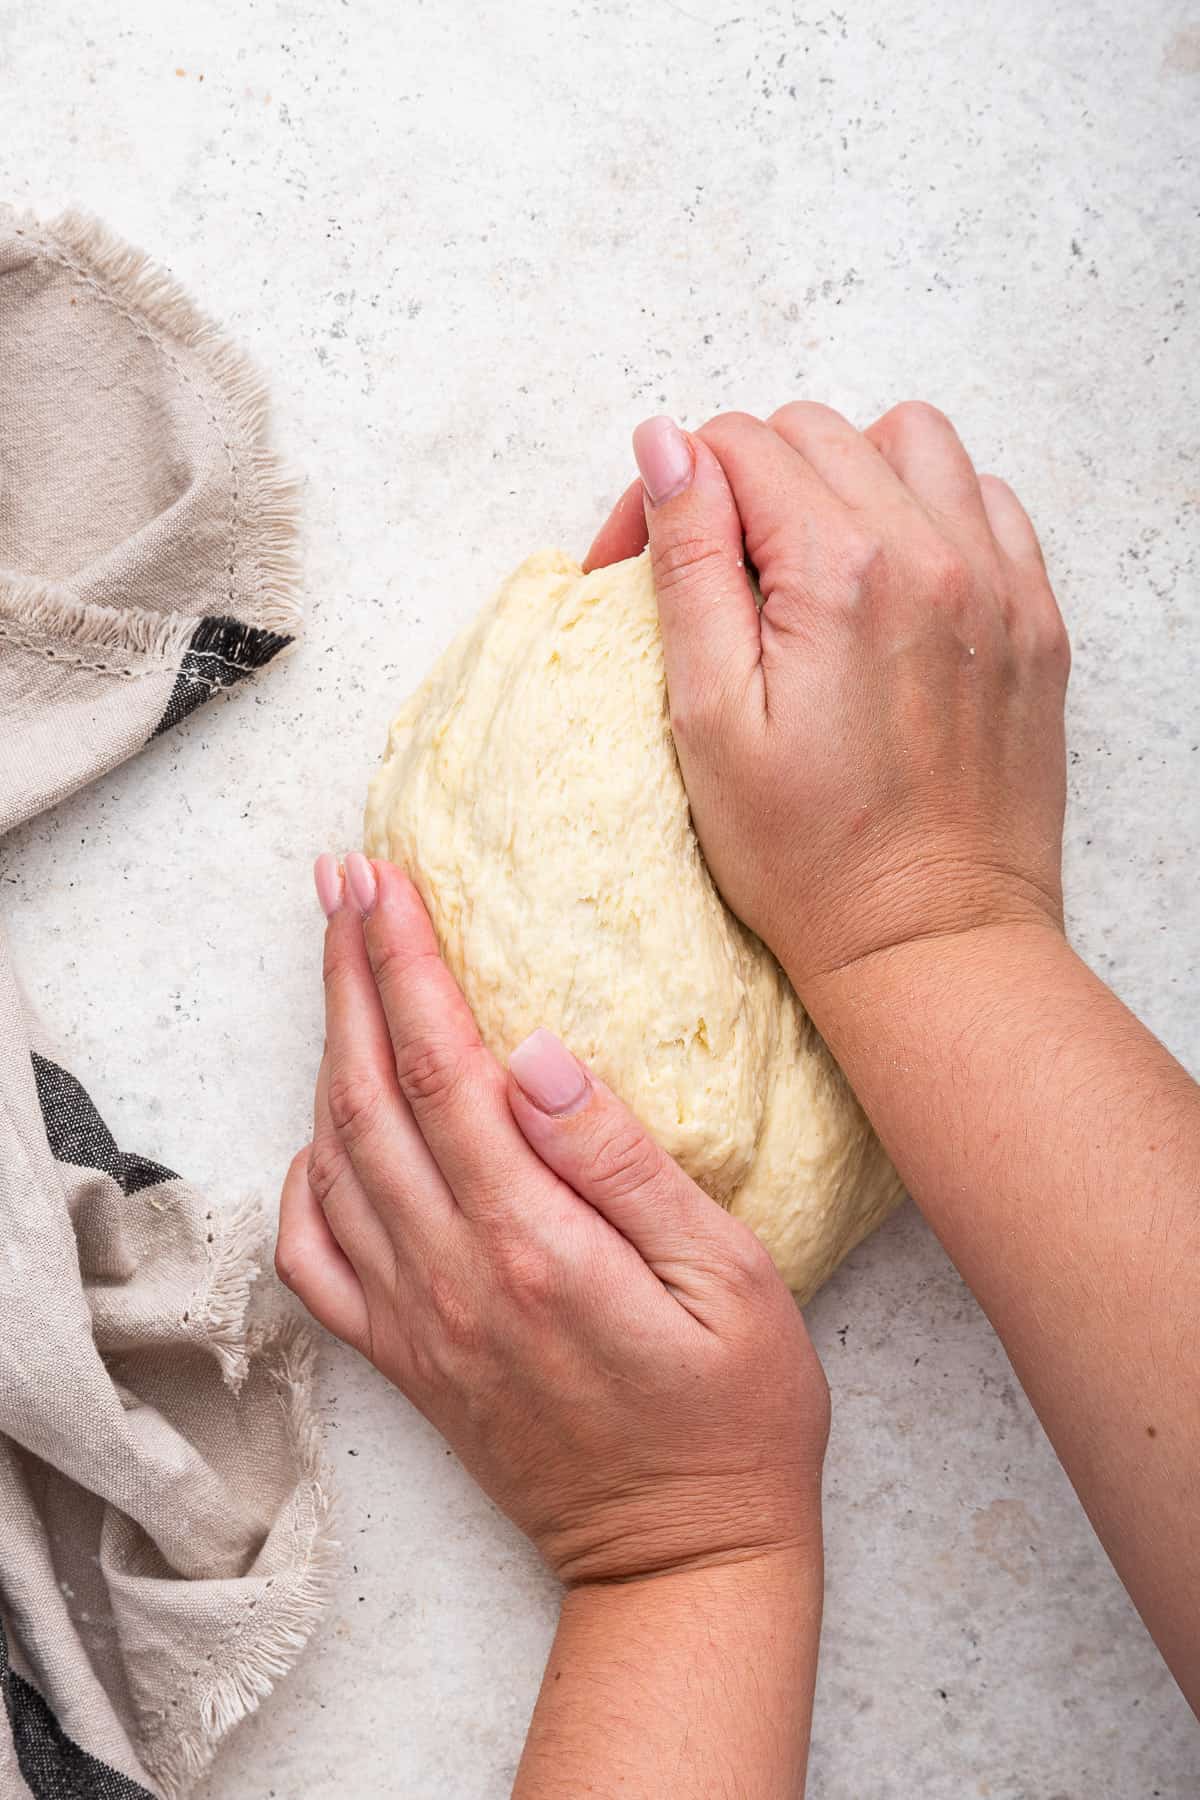 Kneading the dough. 